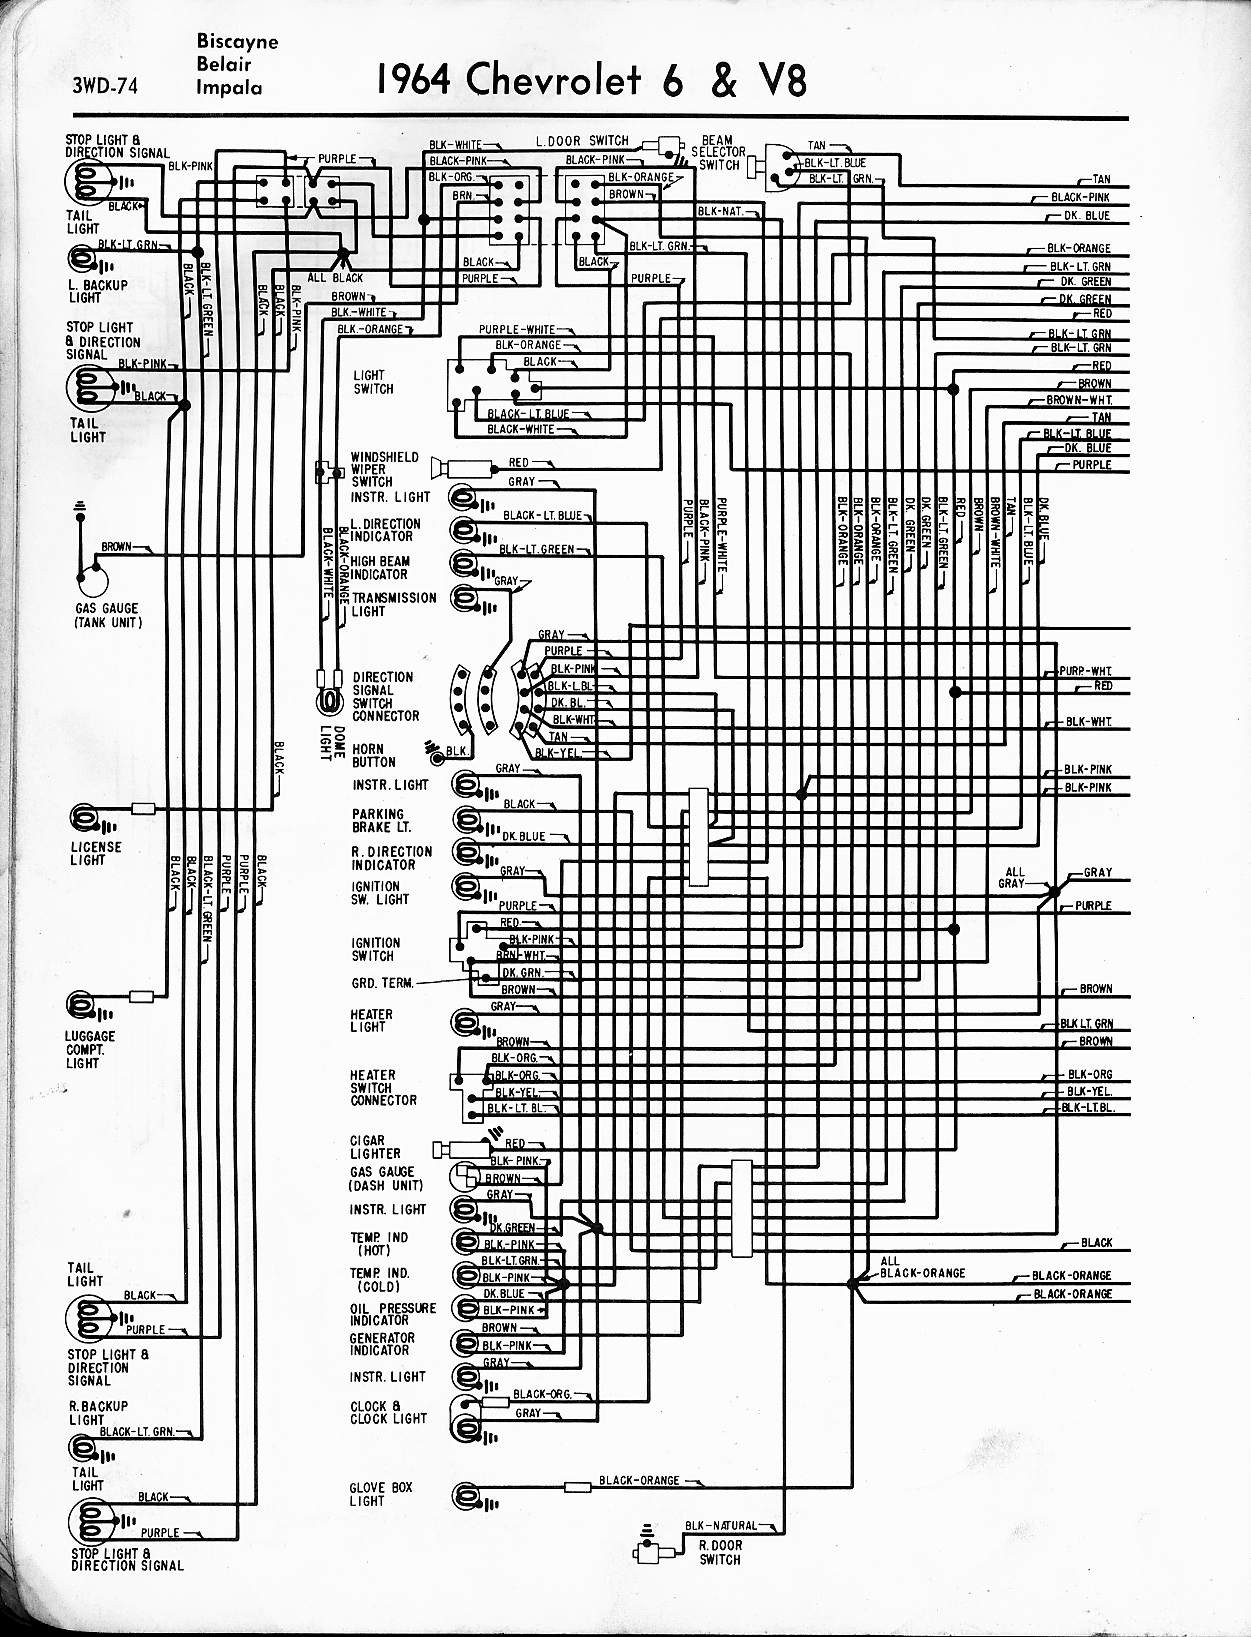 1971 Chevelle Wiring Diagram Fuse Box Diagram for 1965 Chevelle Wiring Diagram Paper Of 1971 Chevelle Wiring Diagram